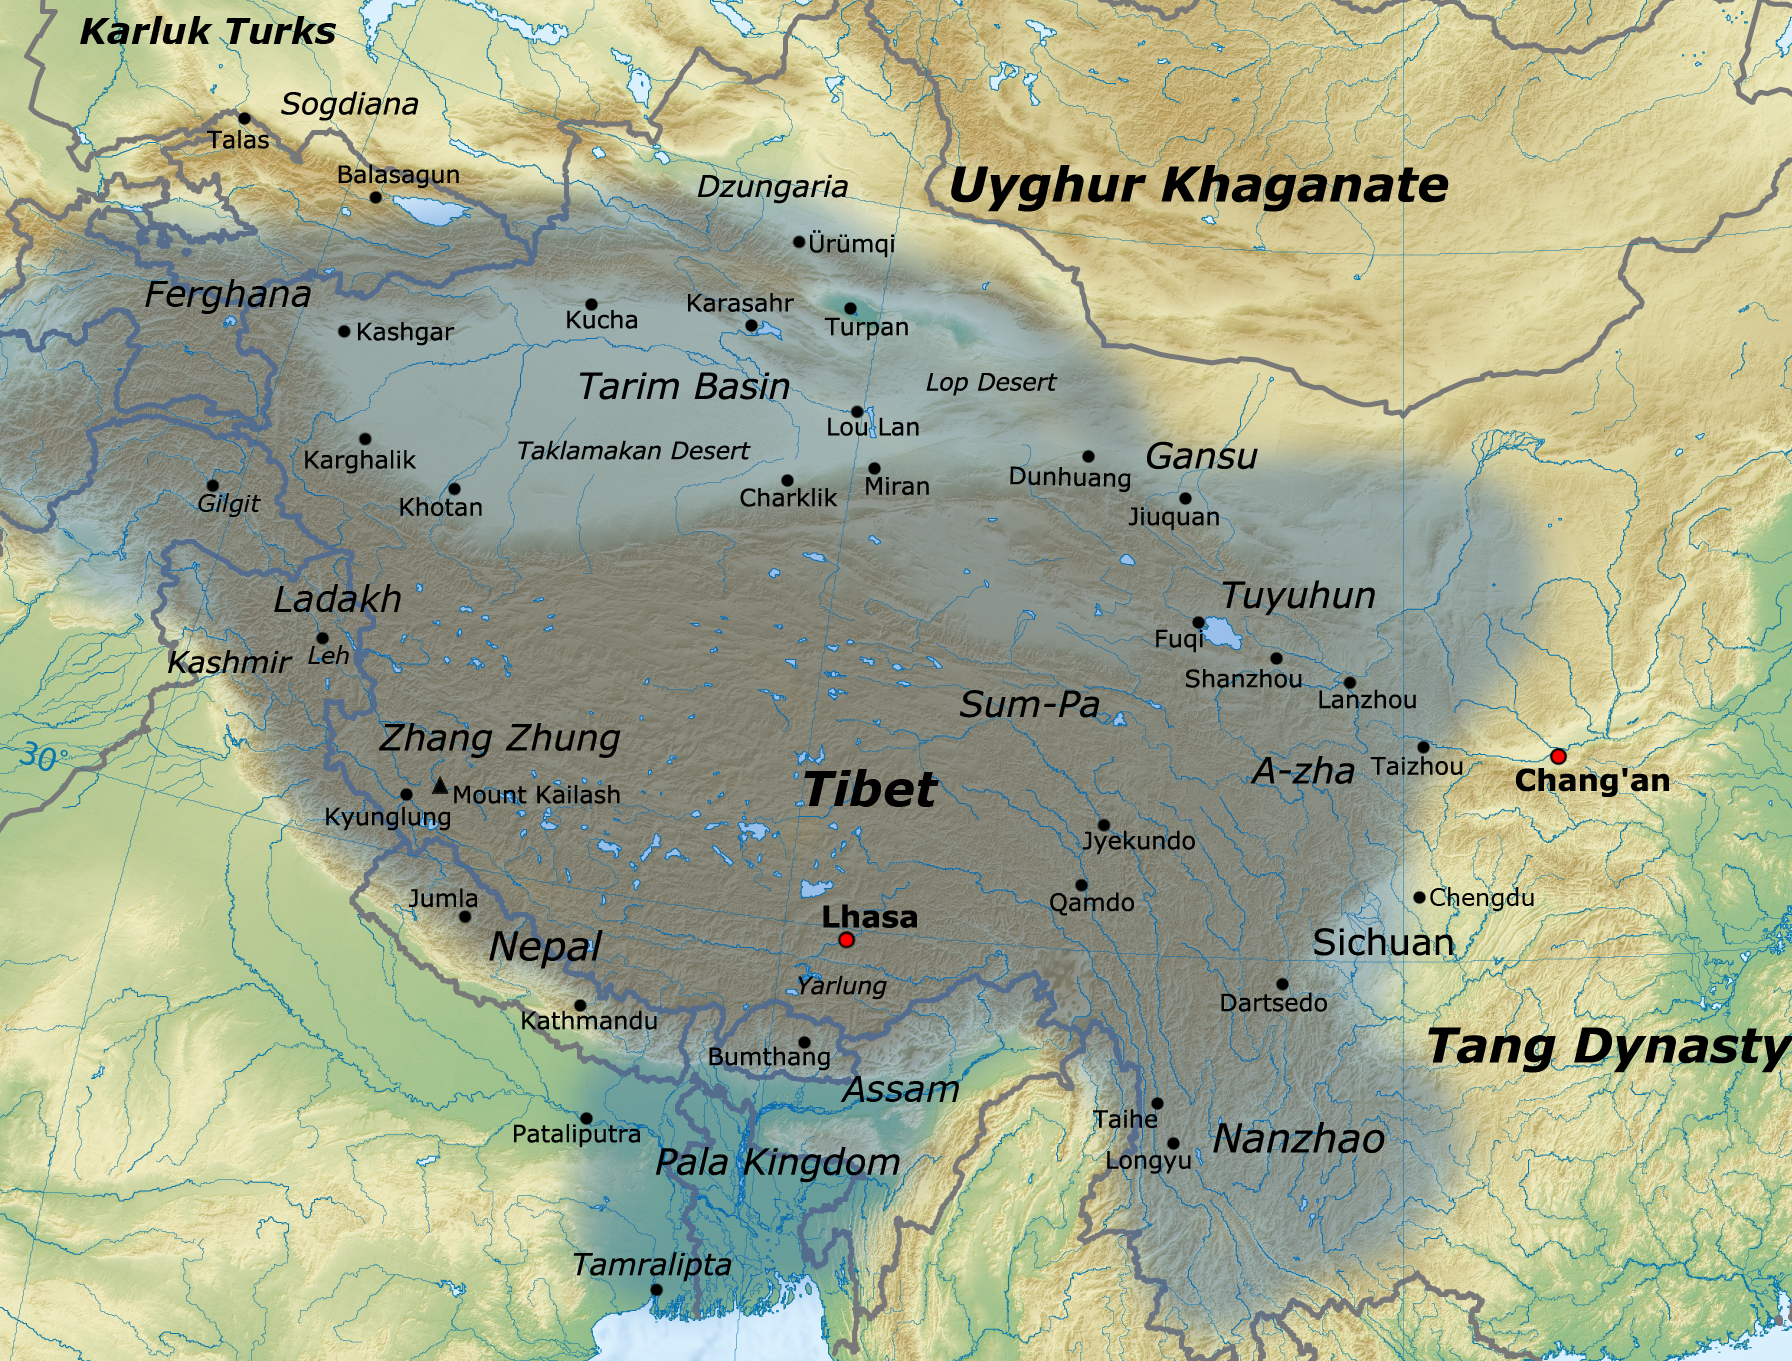 Tibetan_empire_greatest_extent_780s-790s_CE.png